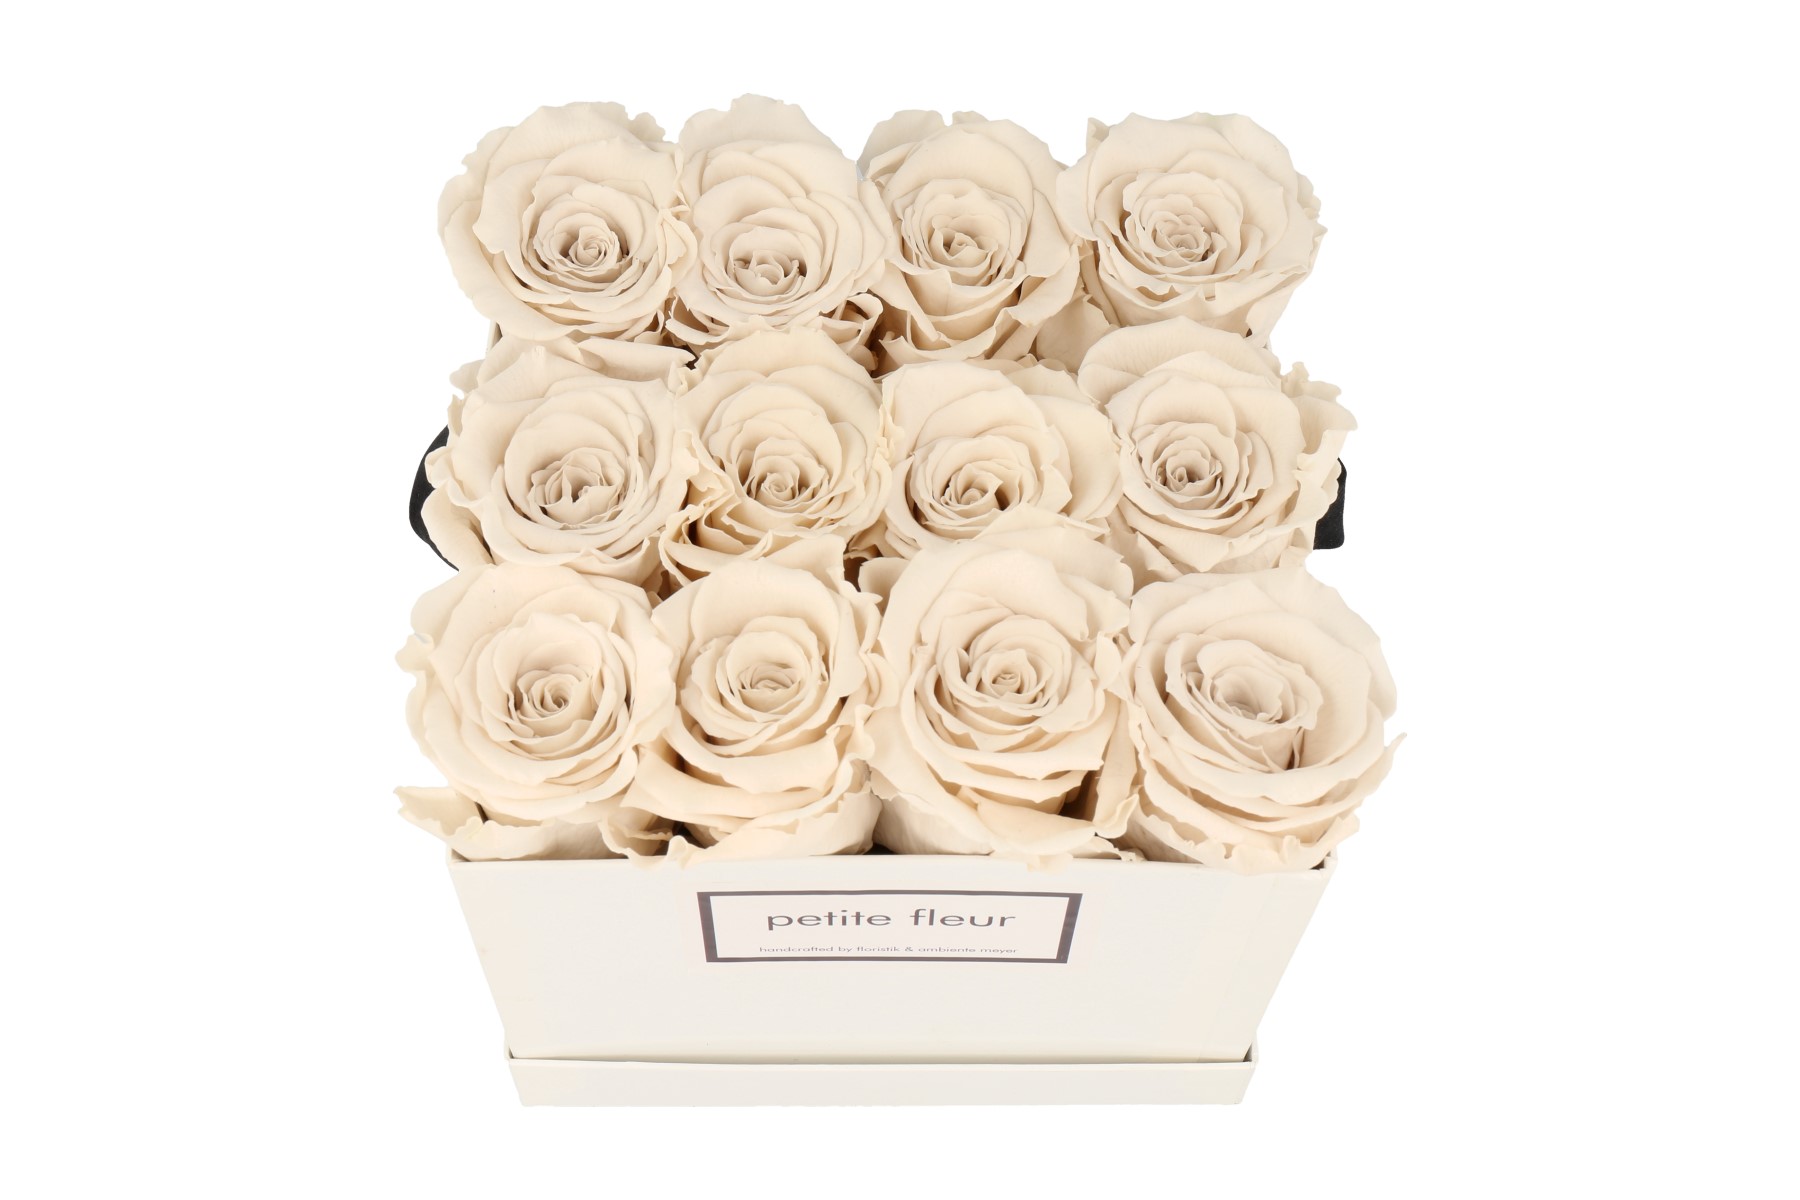 Petite Fleur Flowerbox Infinity Rosen M quadratisch in Ivory mit 9-12 Rosen 